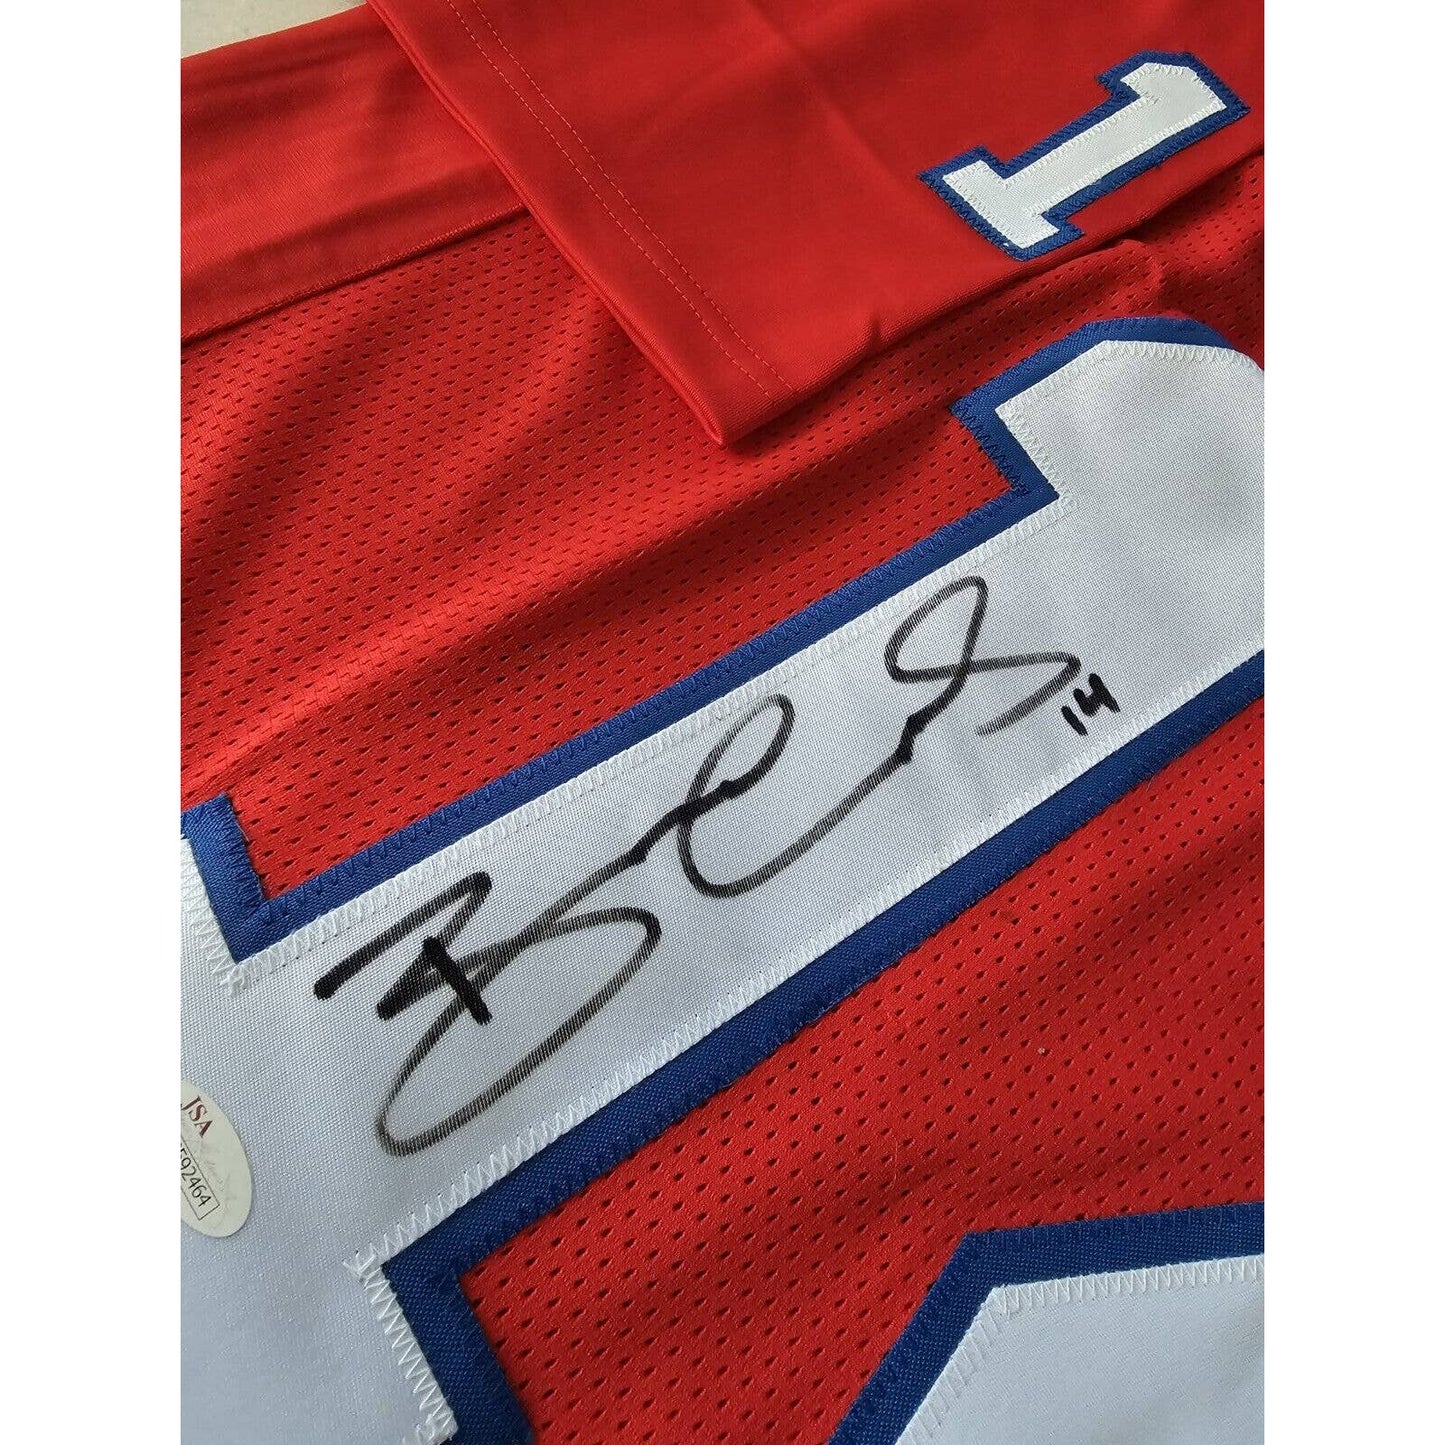 Brandin Cooks Autographed/Signed Jersey JSA COA New England Patriots